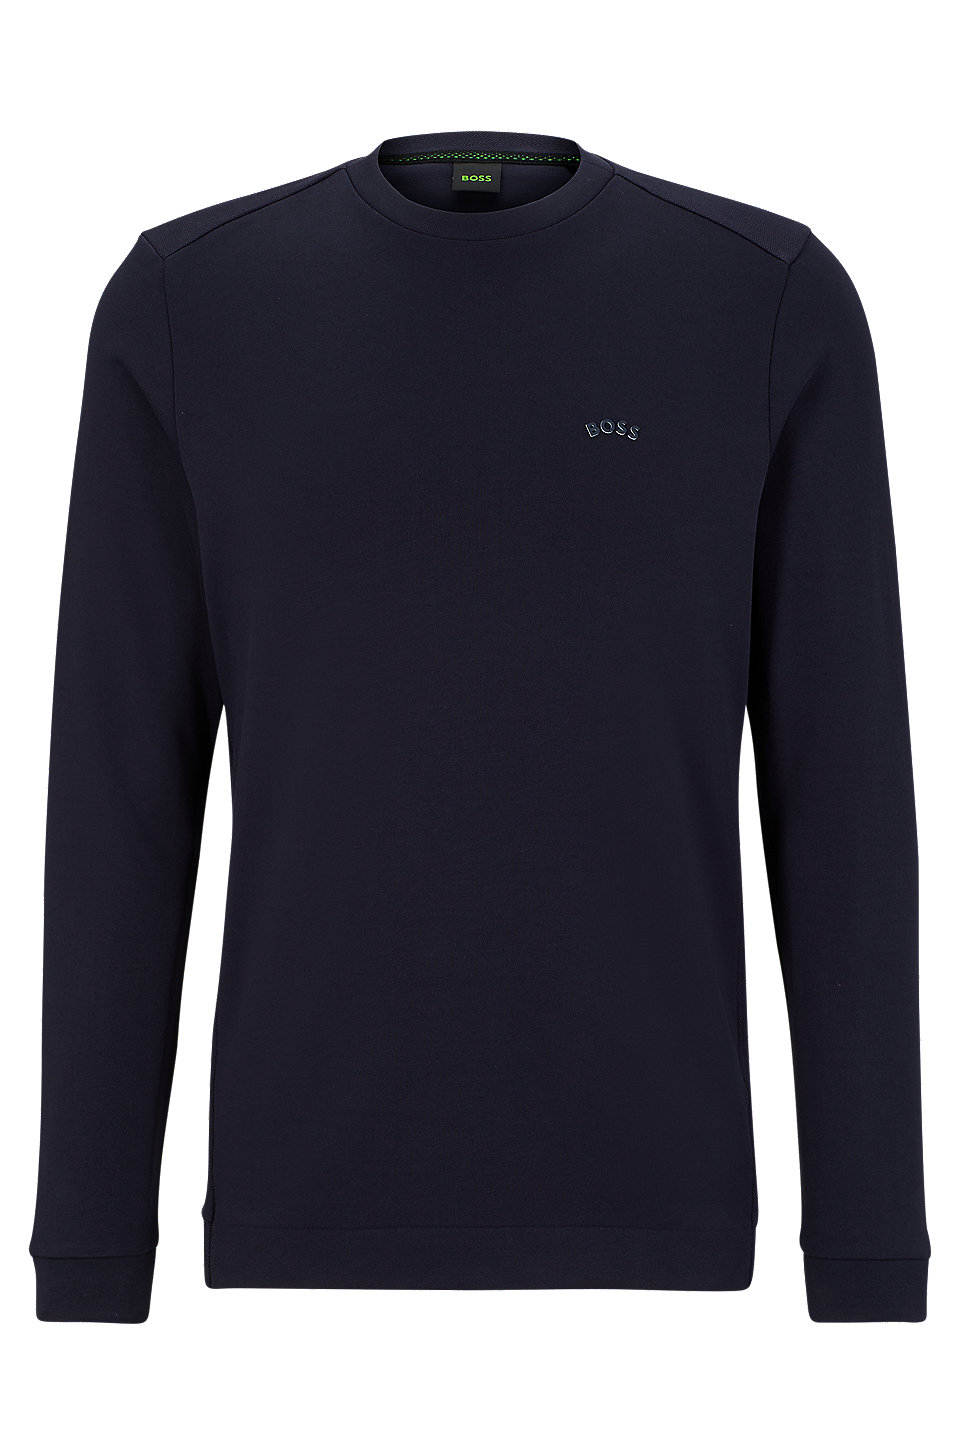 BOSS - Crew-neck sweatshirt in interlock cotton with curved logo